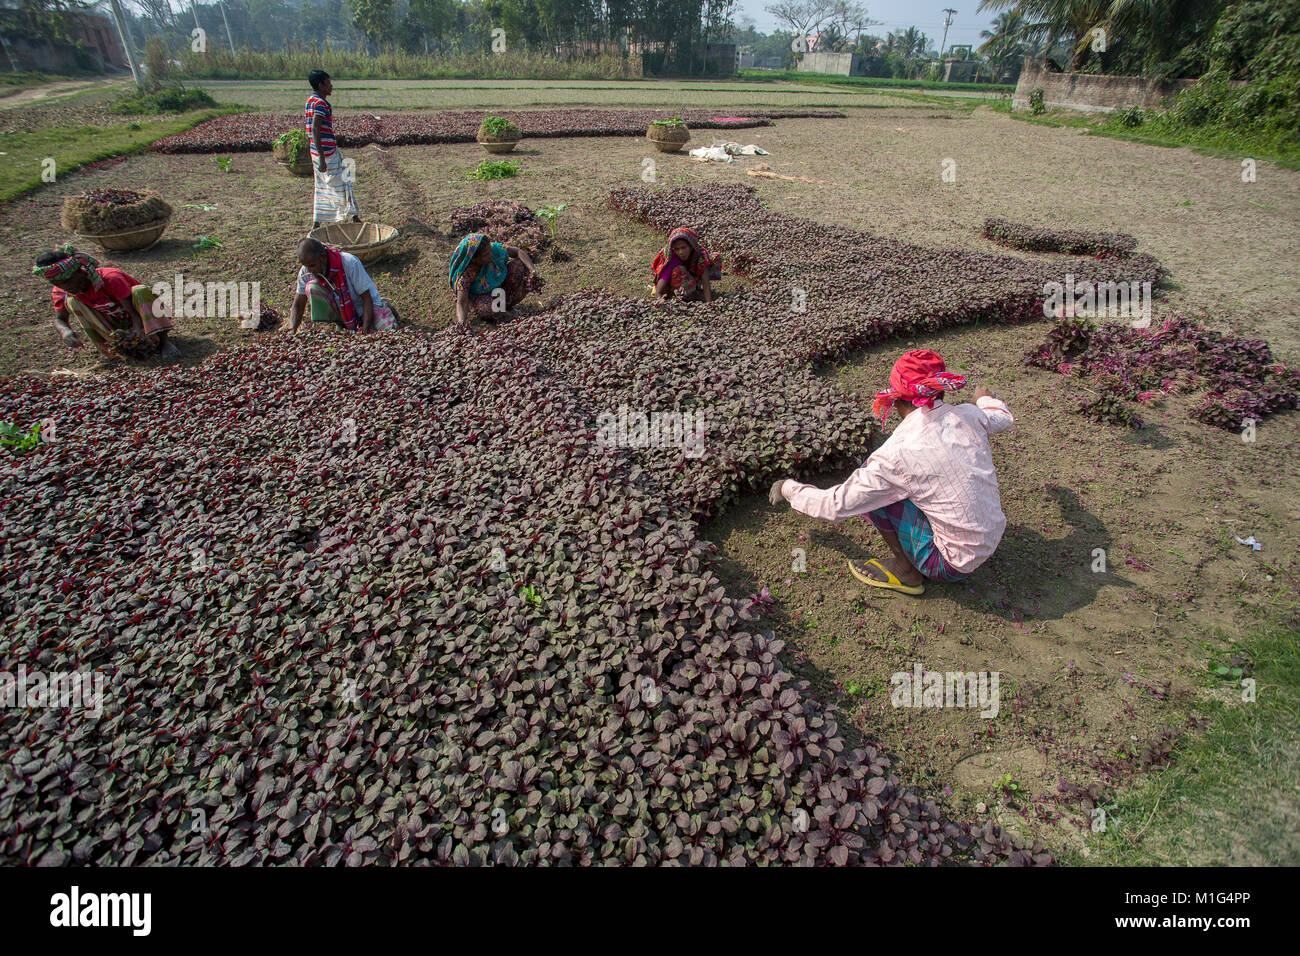 Labors are harvesting Lal Shak (Red amaranth) at Savar, Bangladesh. Stock Photo